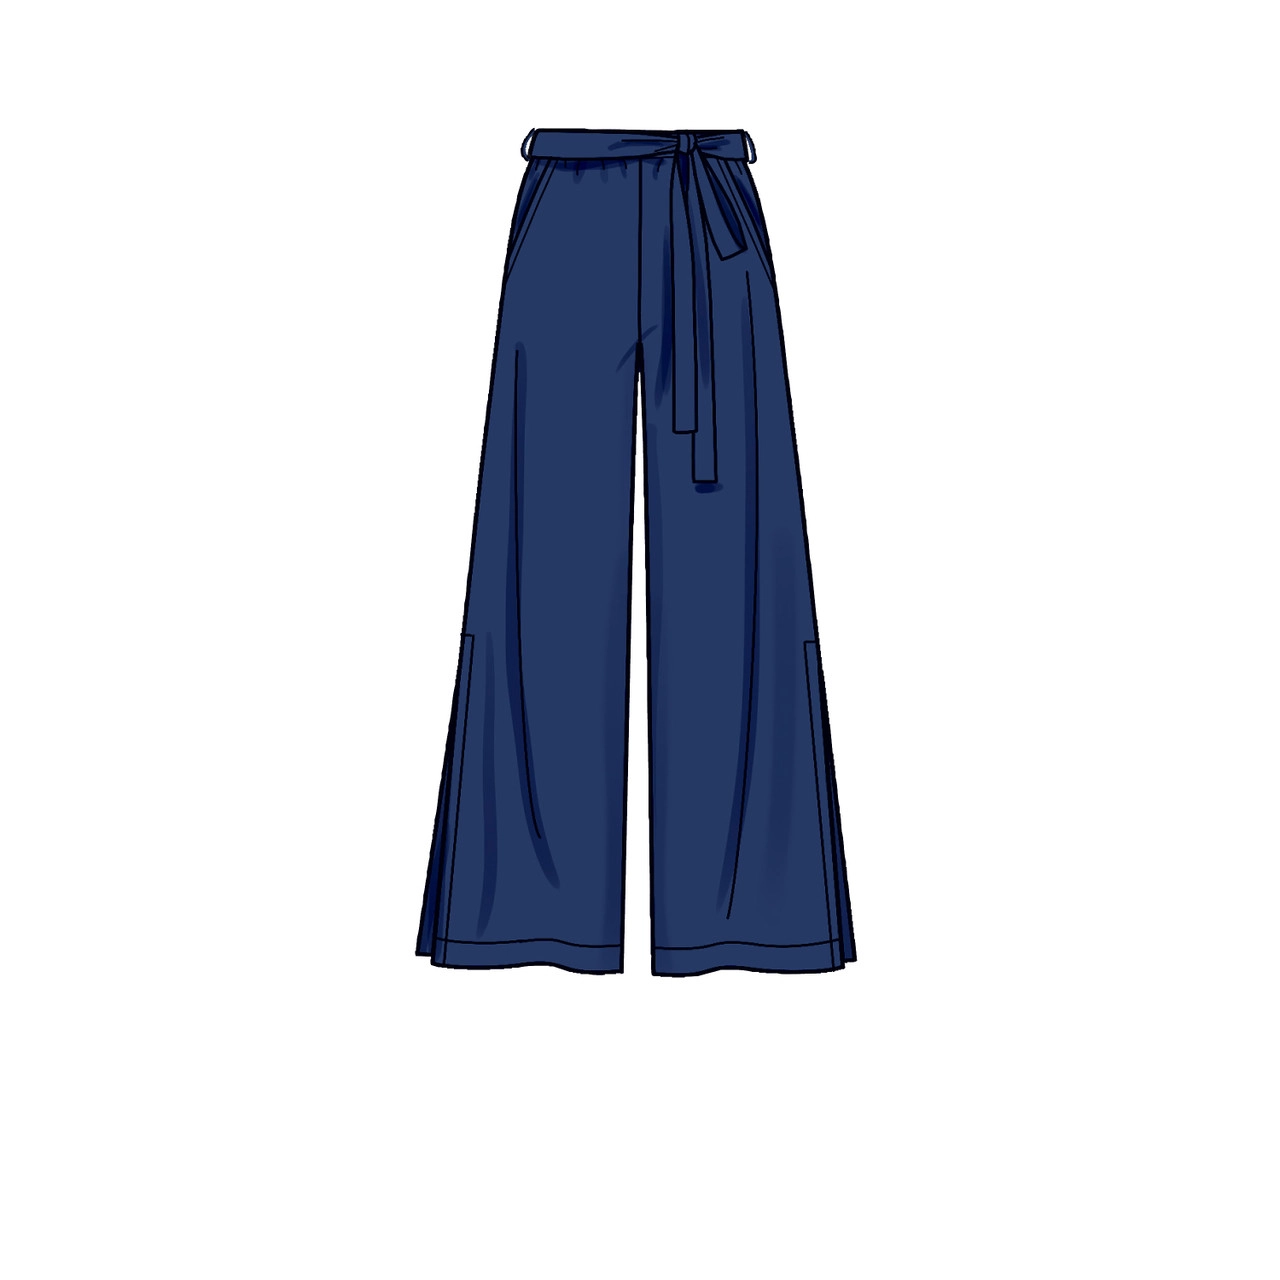 New Look #6691 - Misses' Slim or Flared Pants Sewing Pattern